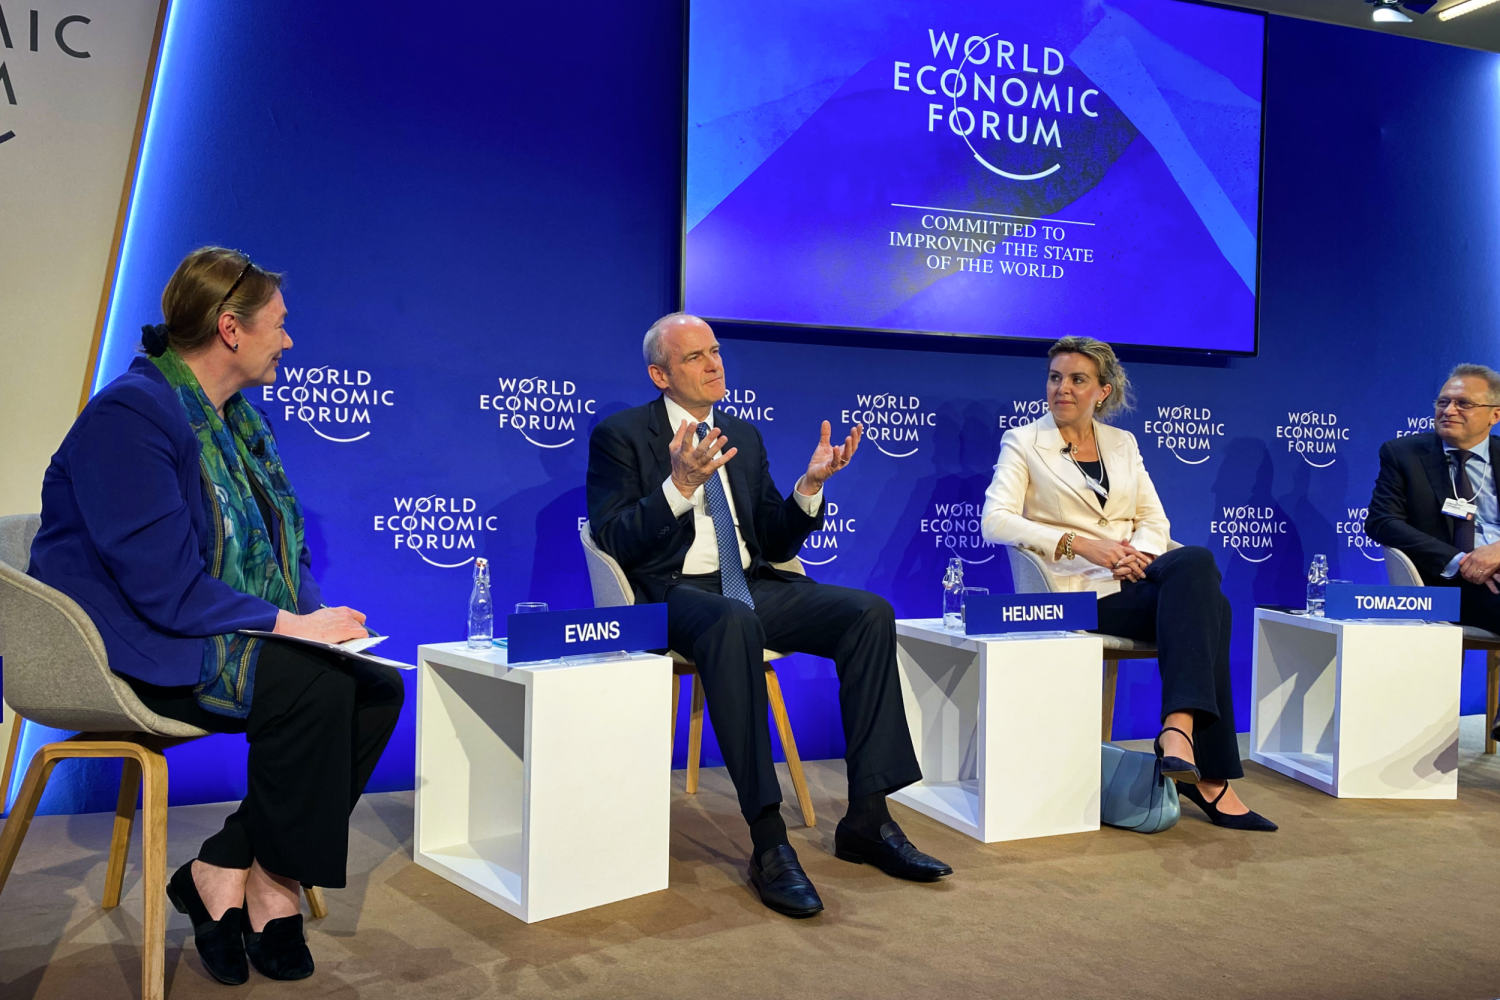 Konsumsi-berkelanjutan-Mike-evans-on-WEF-Davos-2022-featured-picture